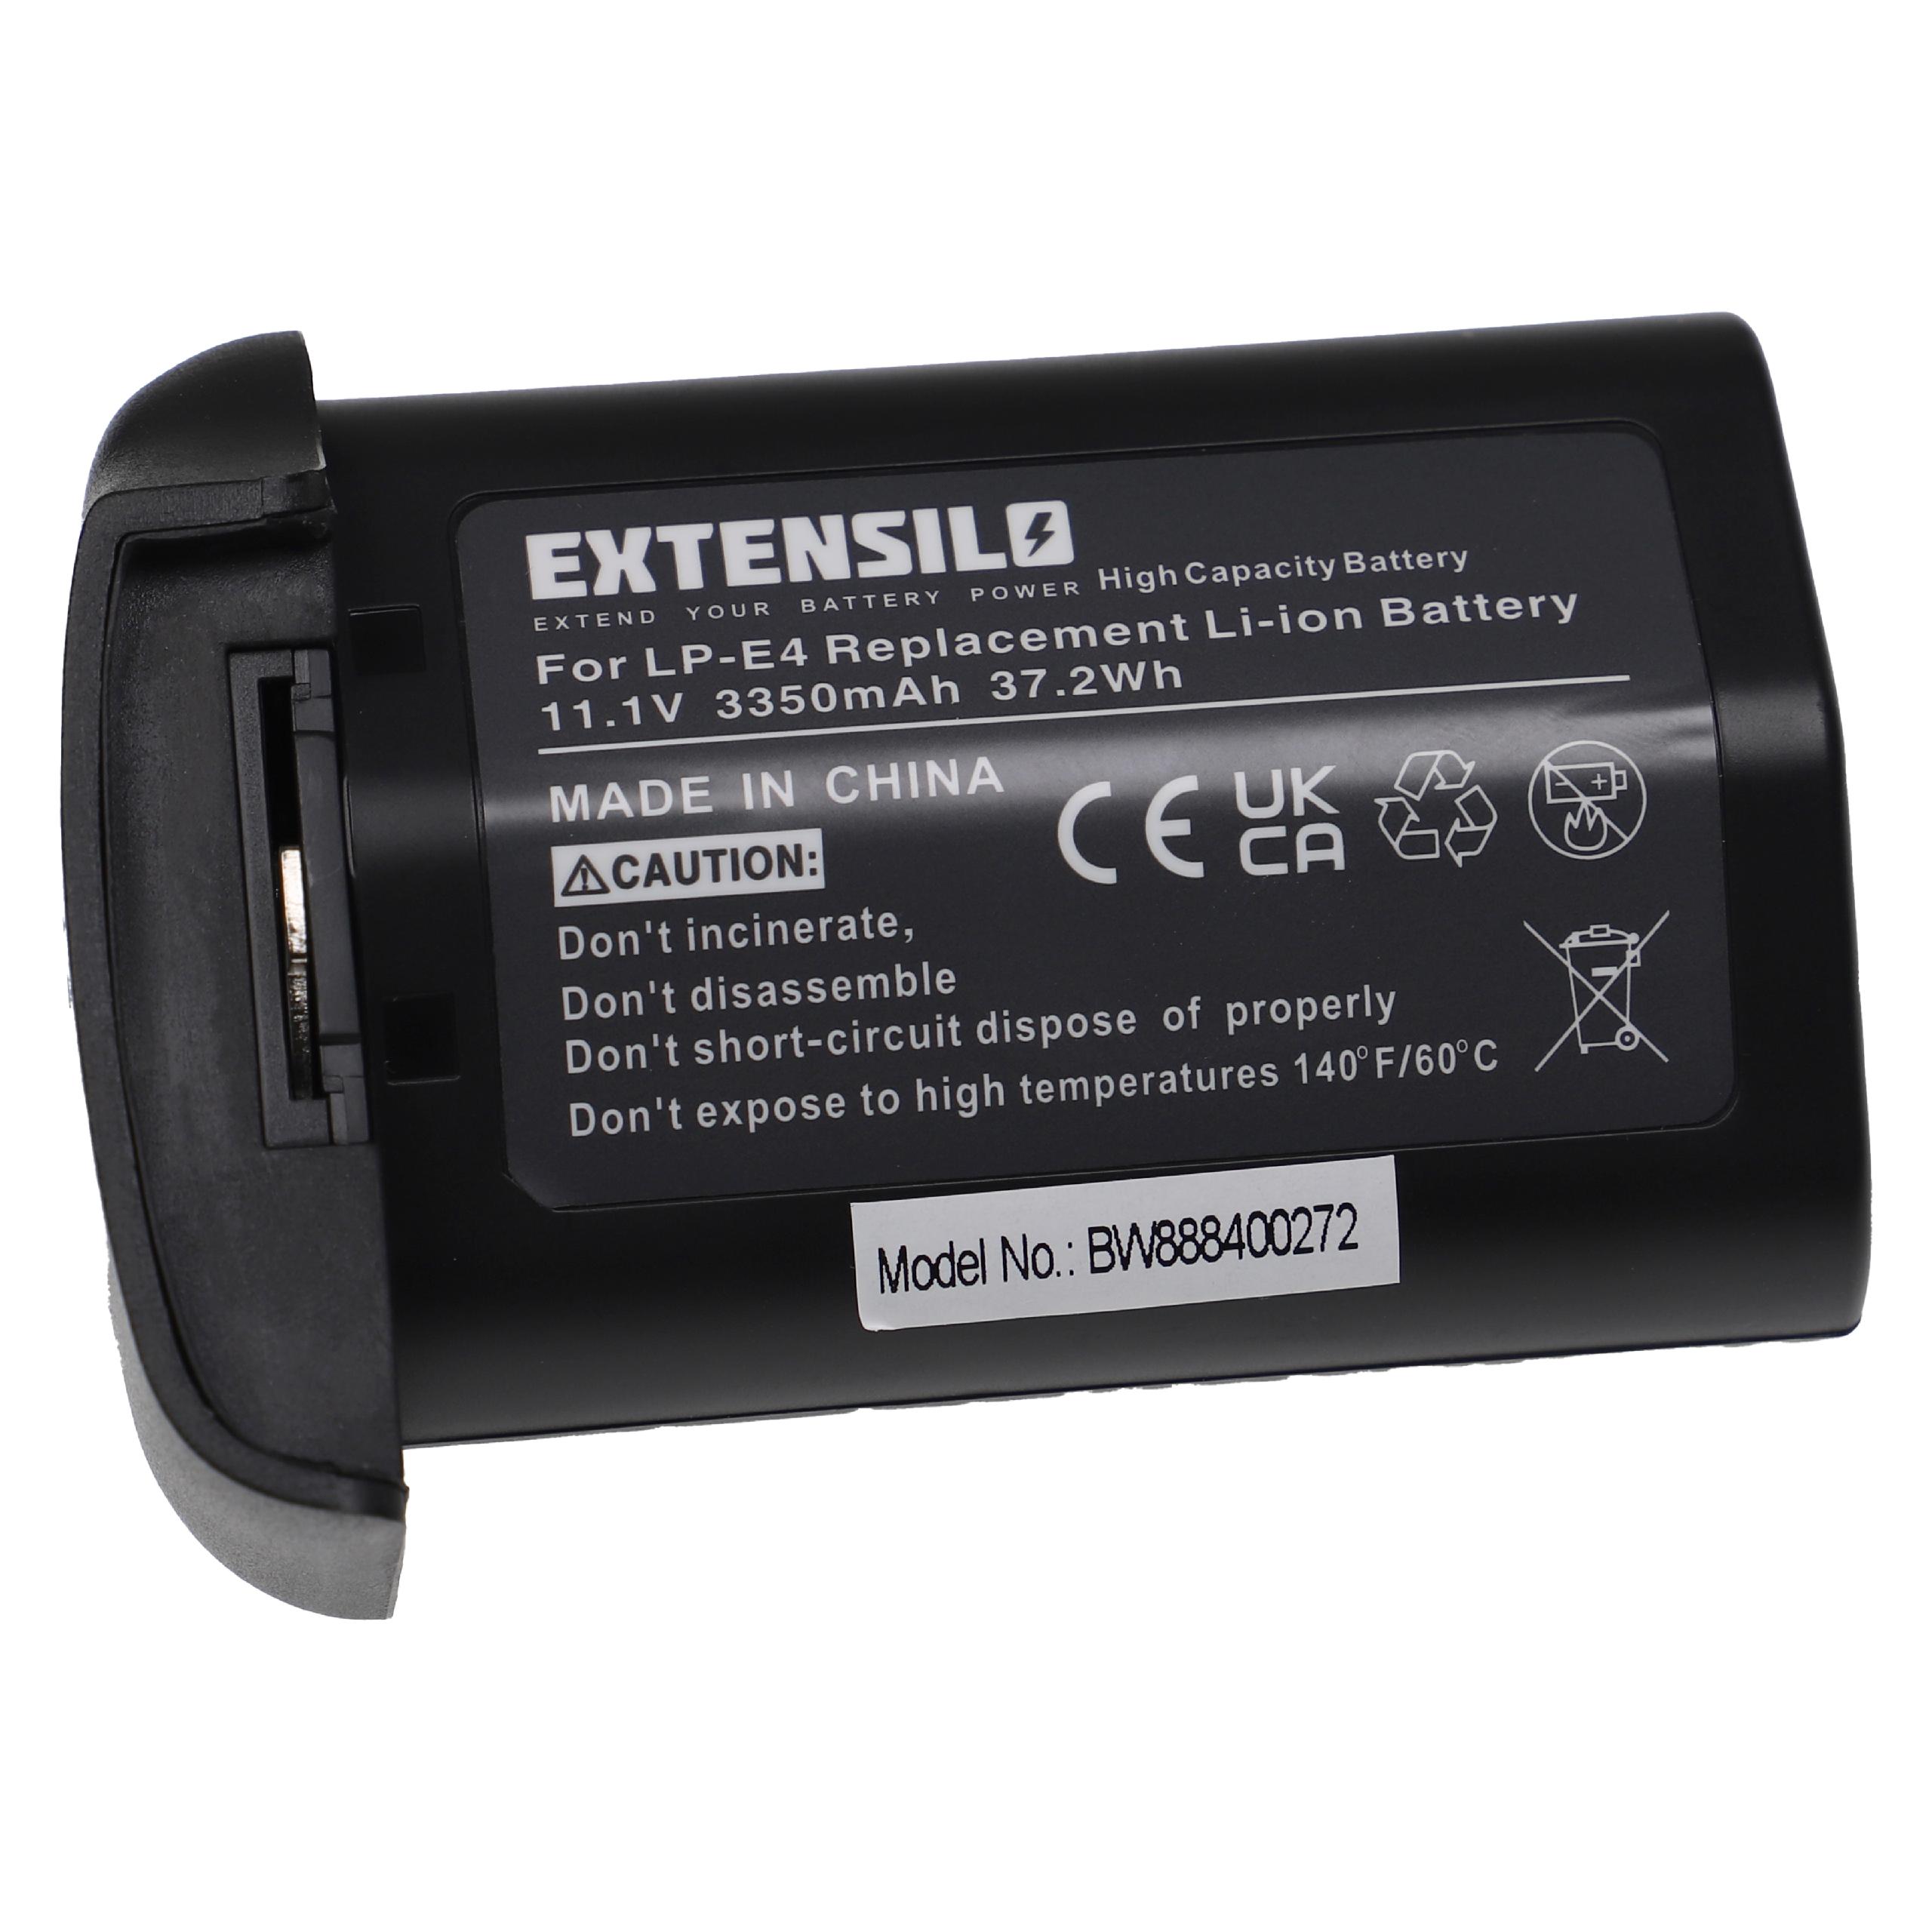 Battery Replacement for Canon LP-E4 - 3350mAh, 11.1V, Li-Ion